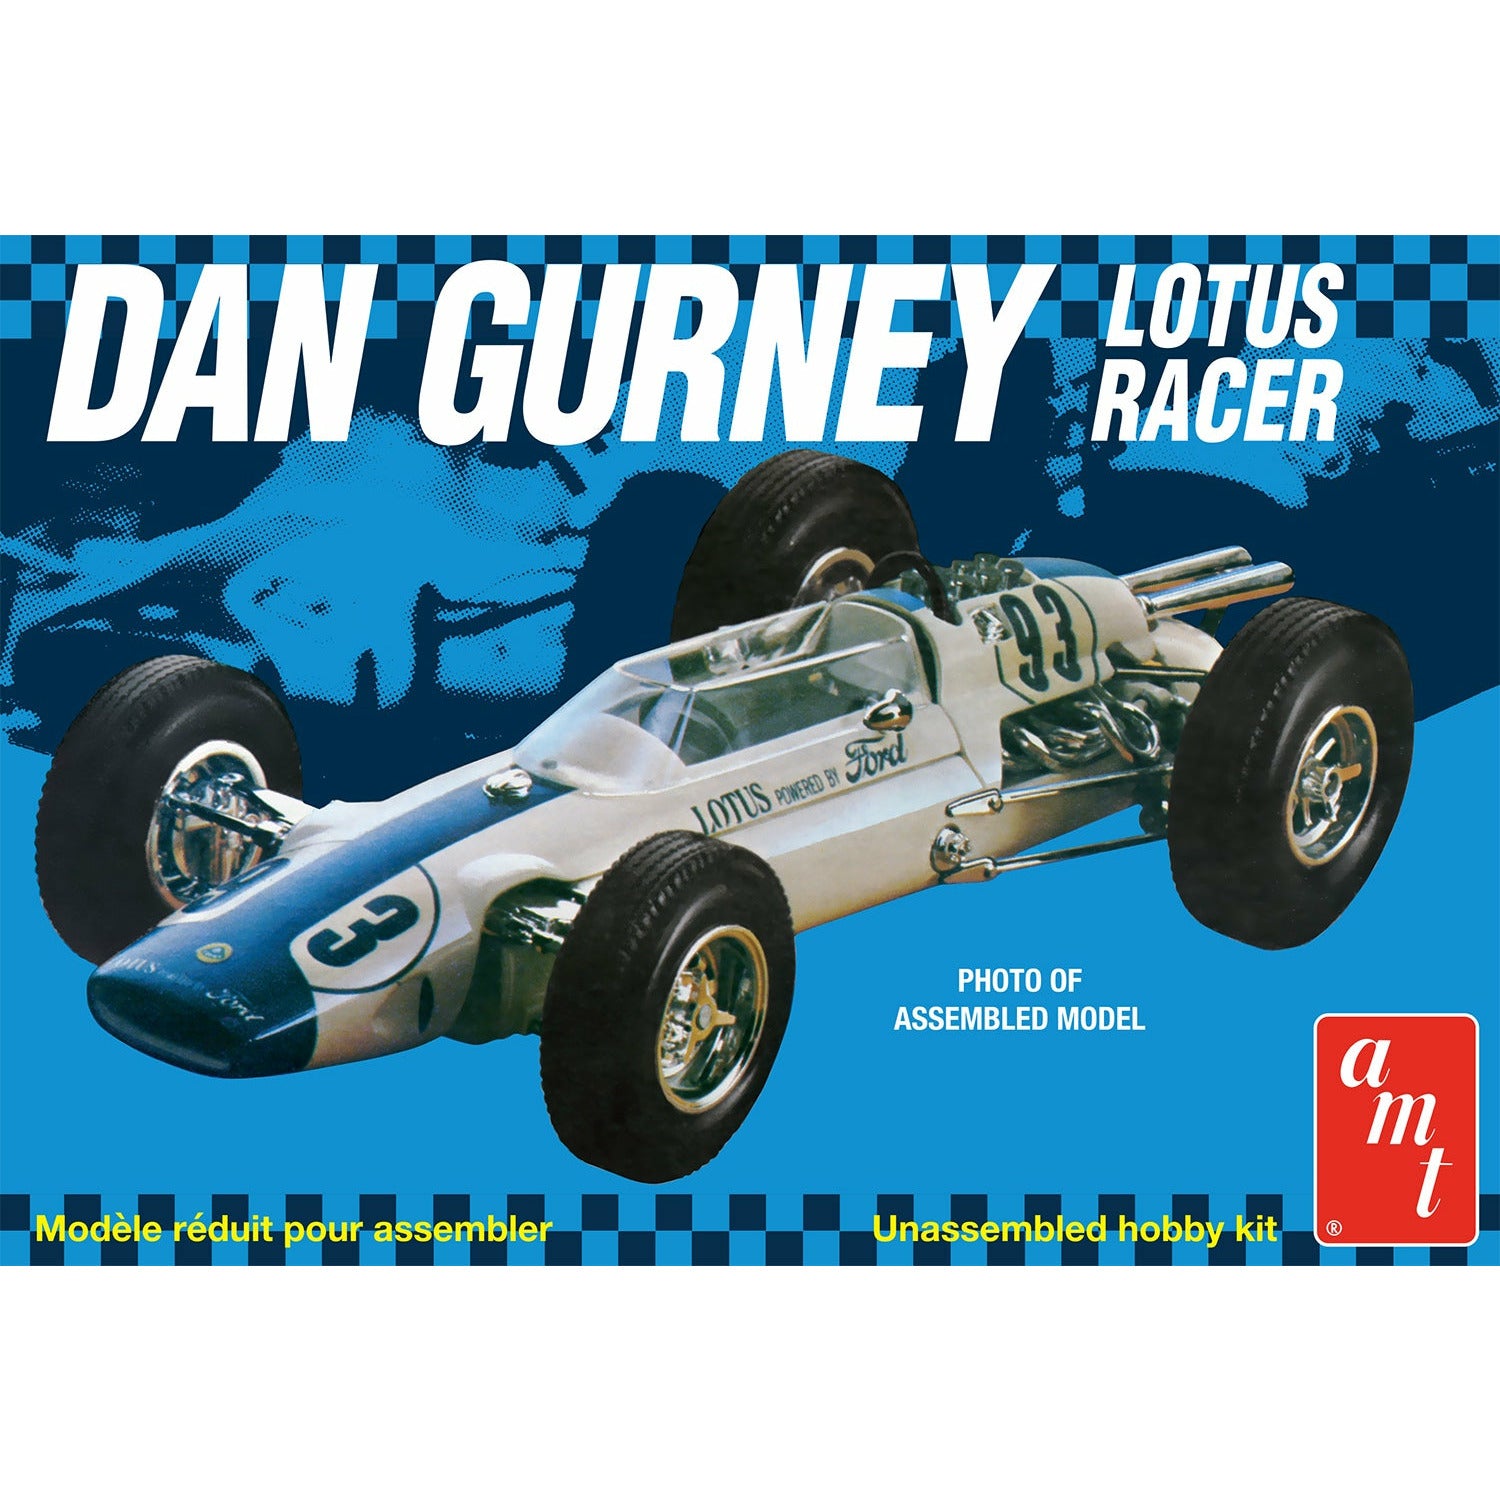 Dan Gourney Lotus Racer 1/25 #1288 by AMT